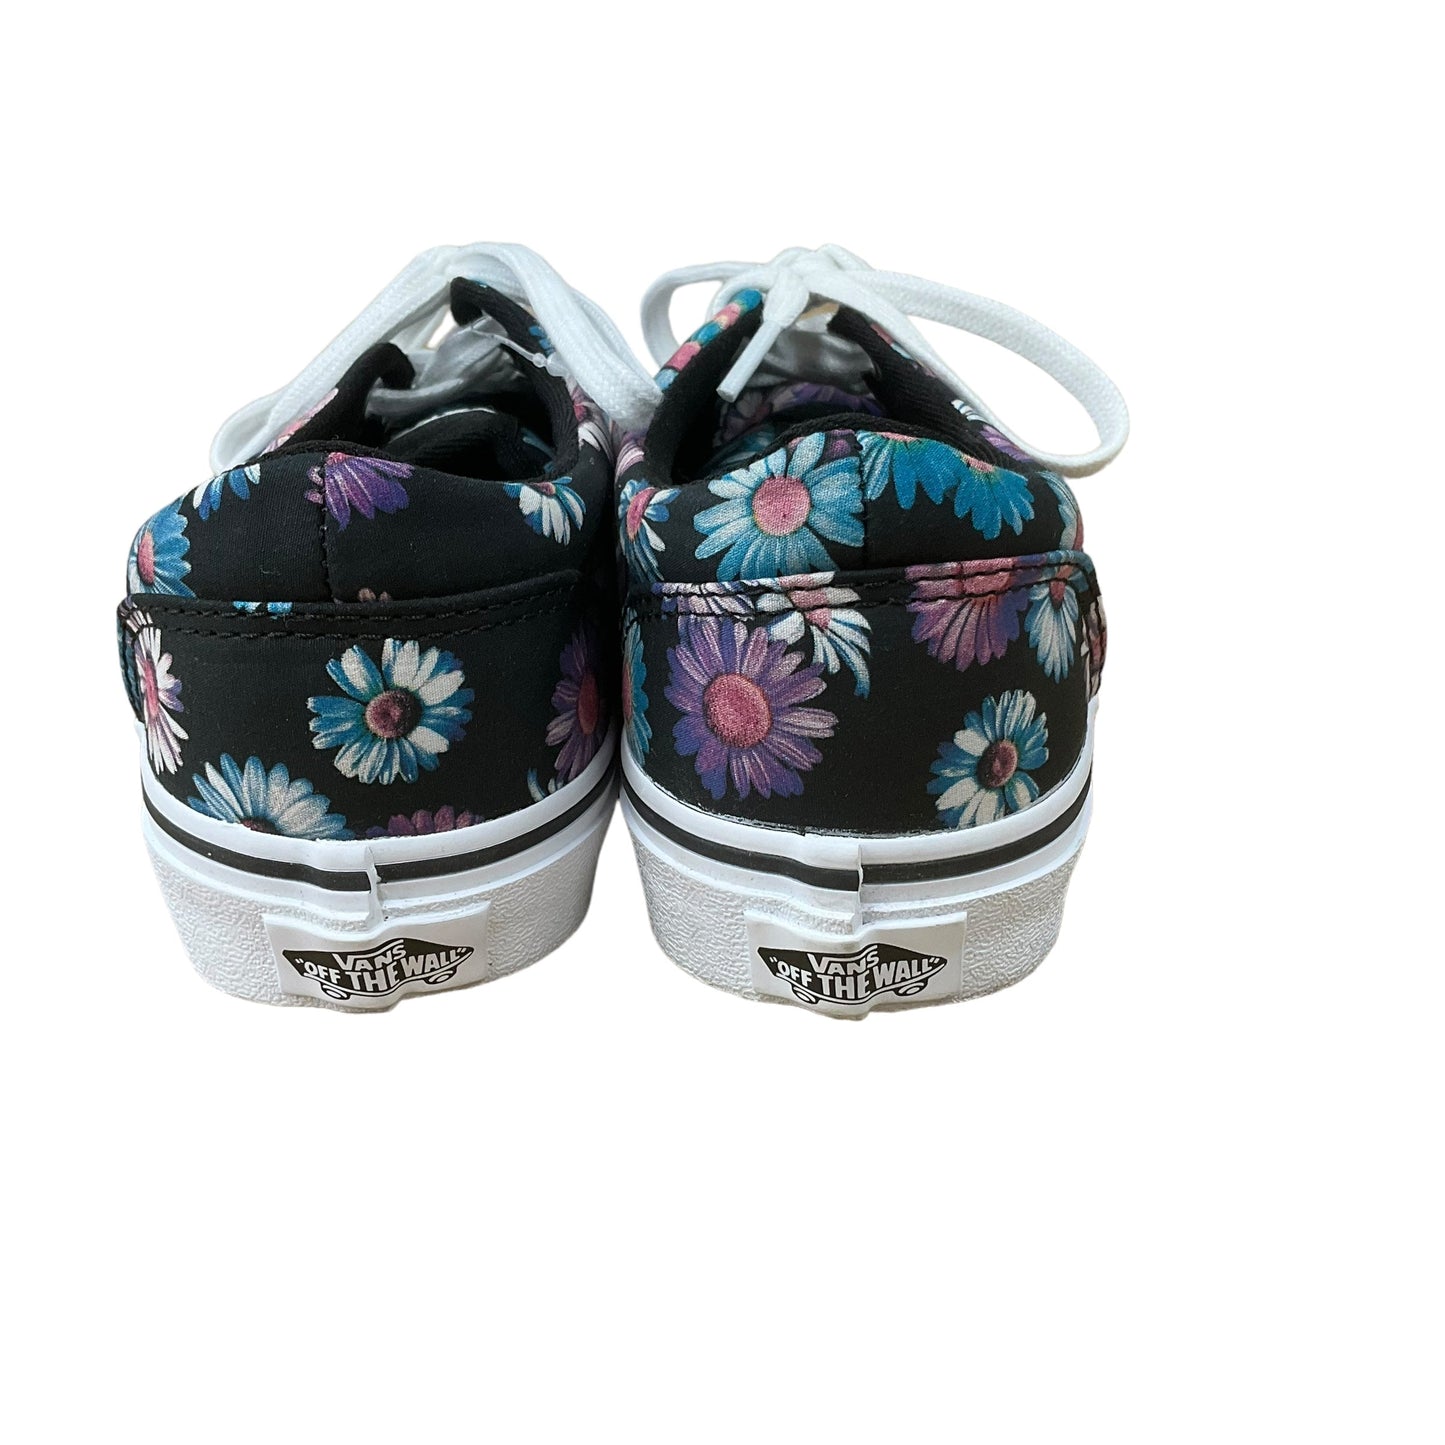 Floral Print Shoes Sneakers Vans, Size 6.5